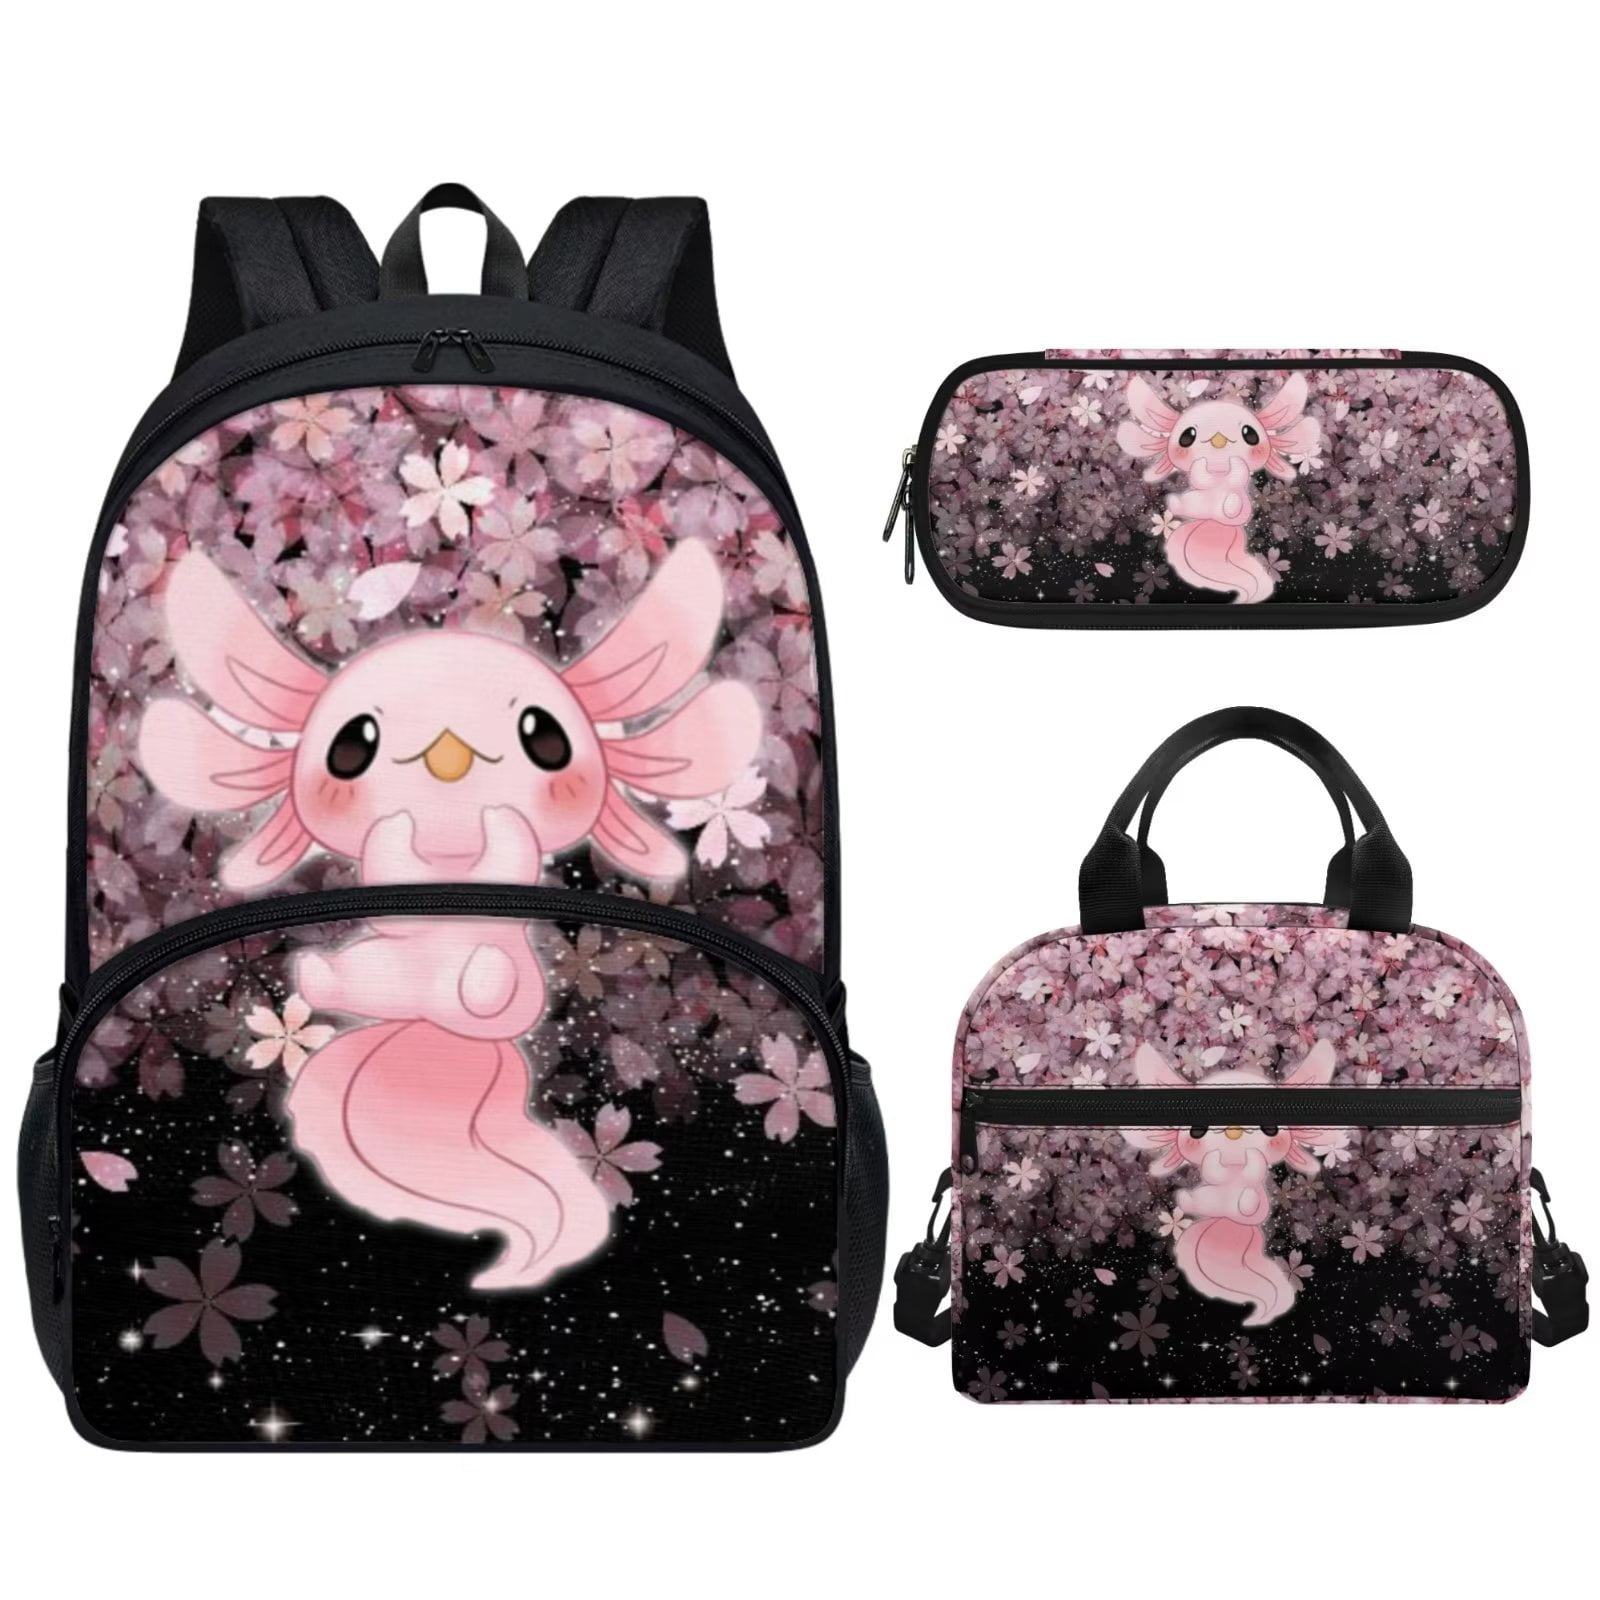 Pzuqiu Elephant Backpack Lunch Bag Combo for School Kids Girls